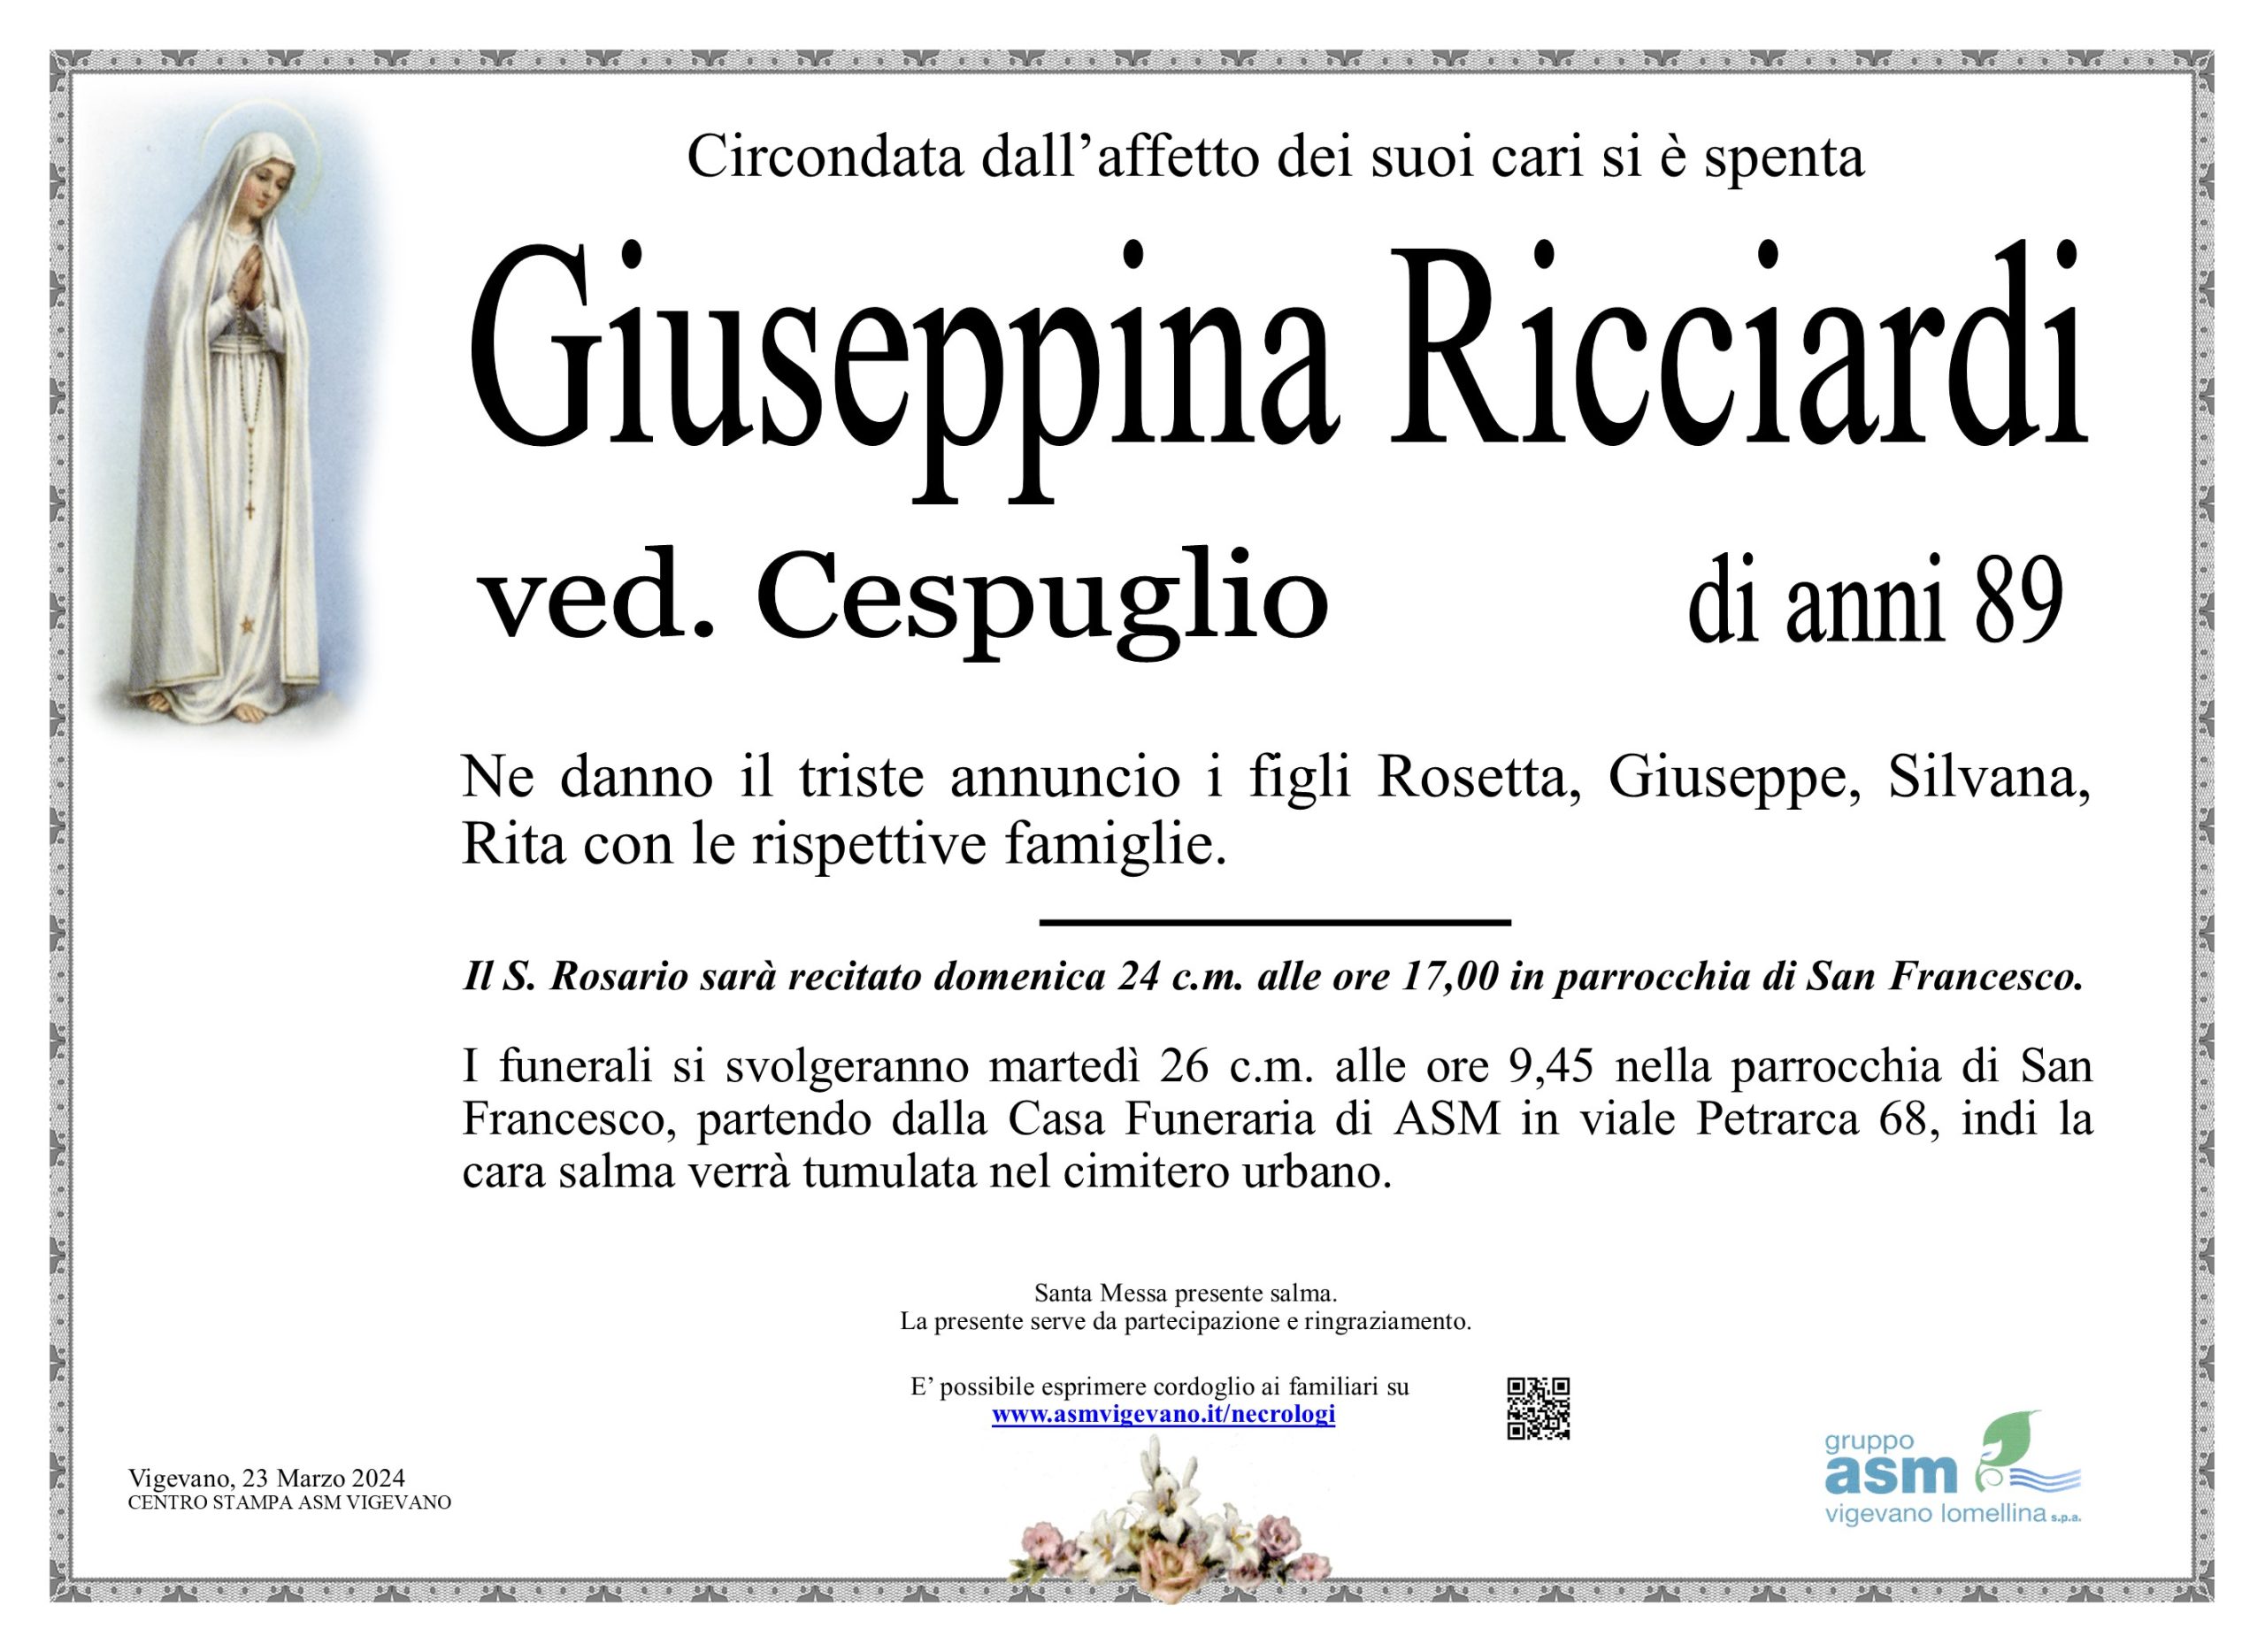 Giuseppina Ricciardi